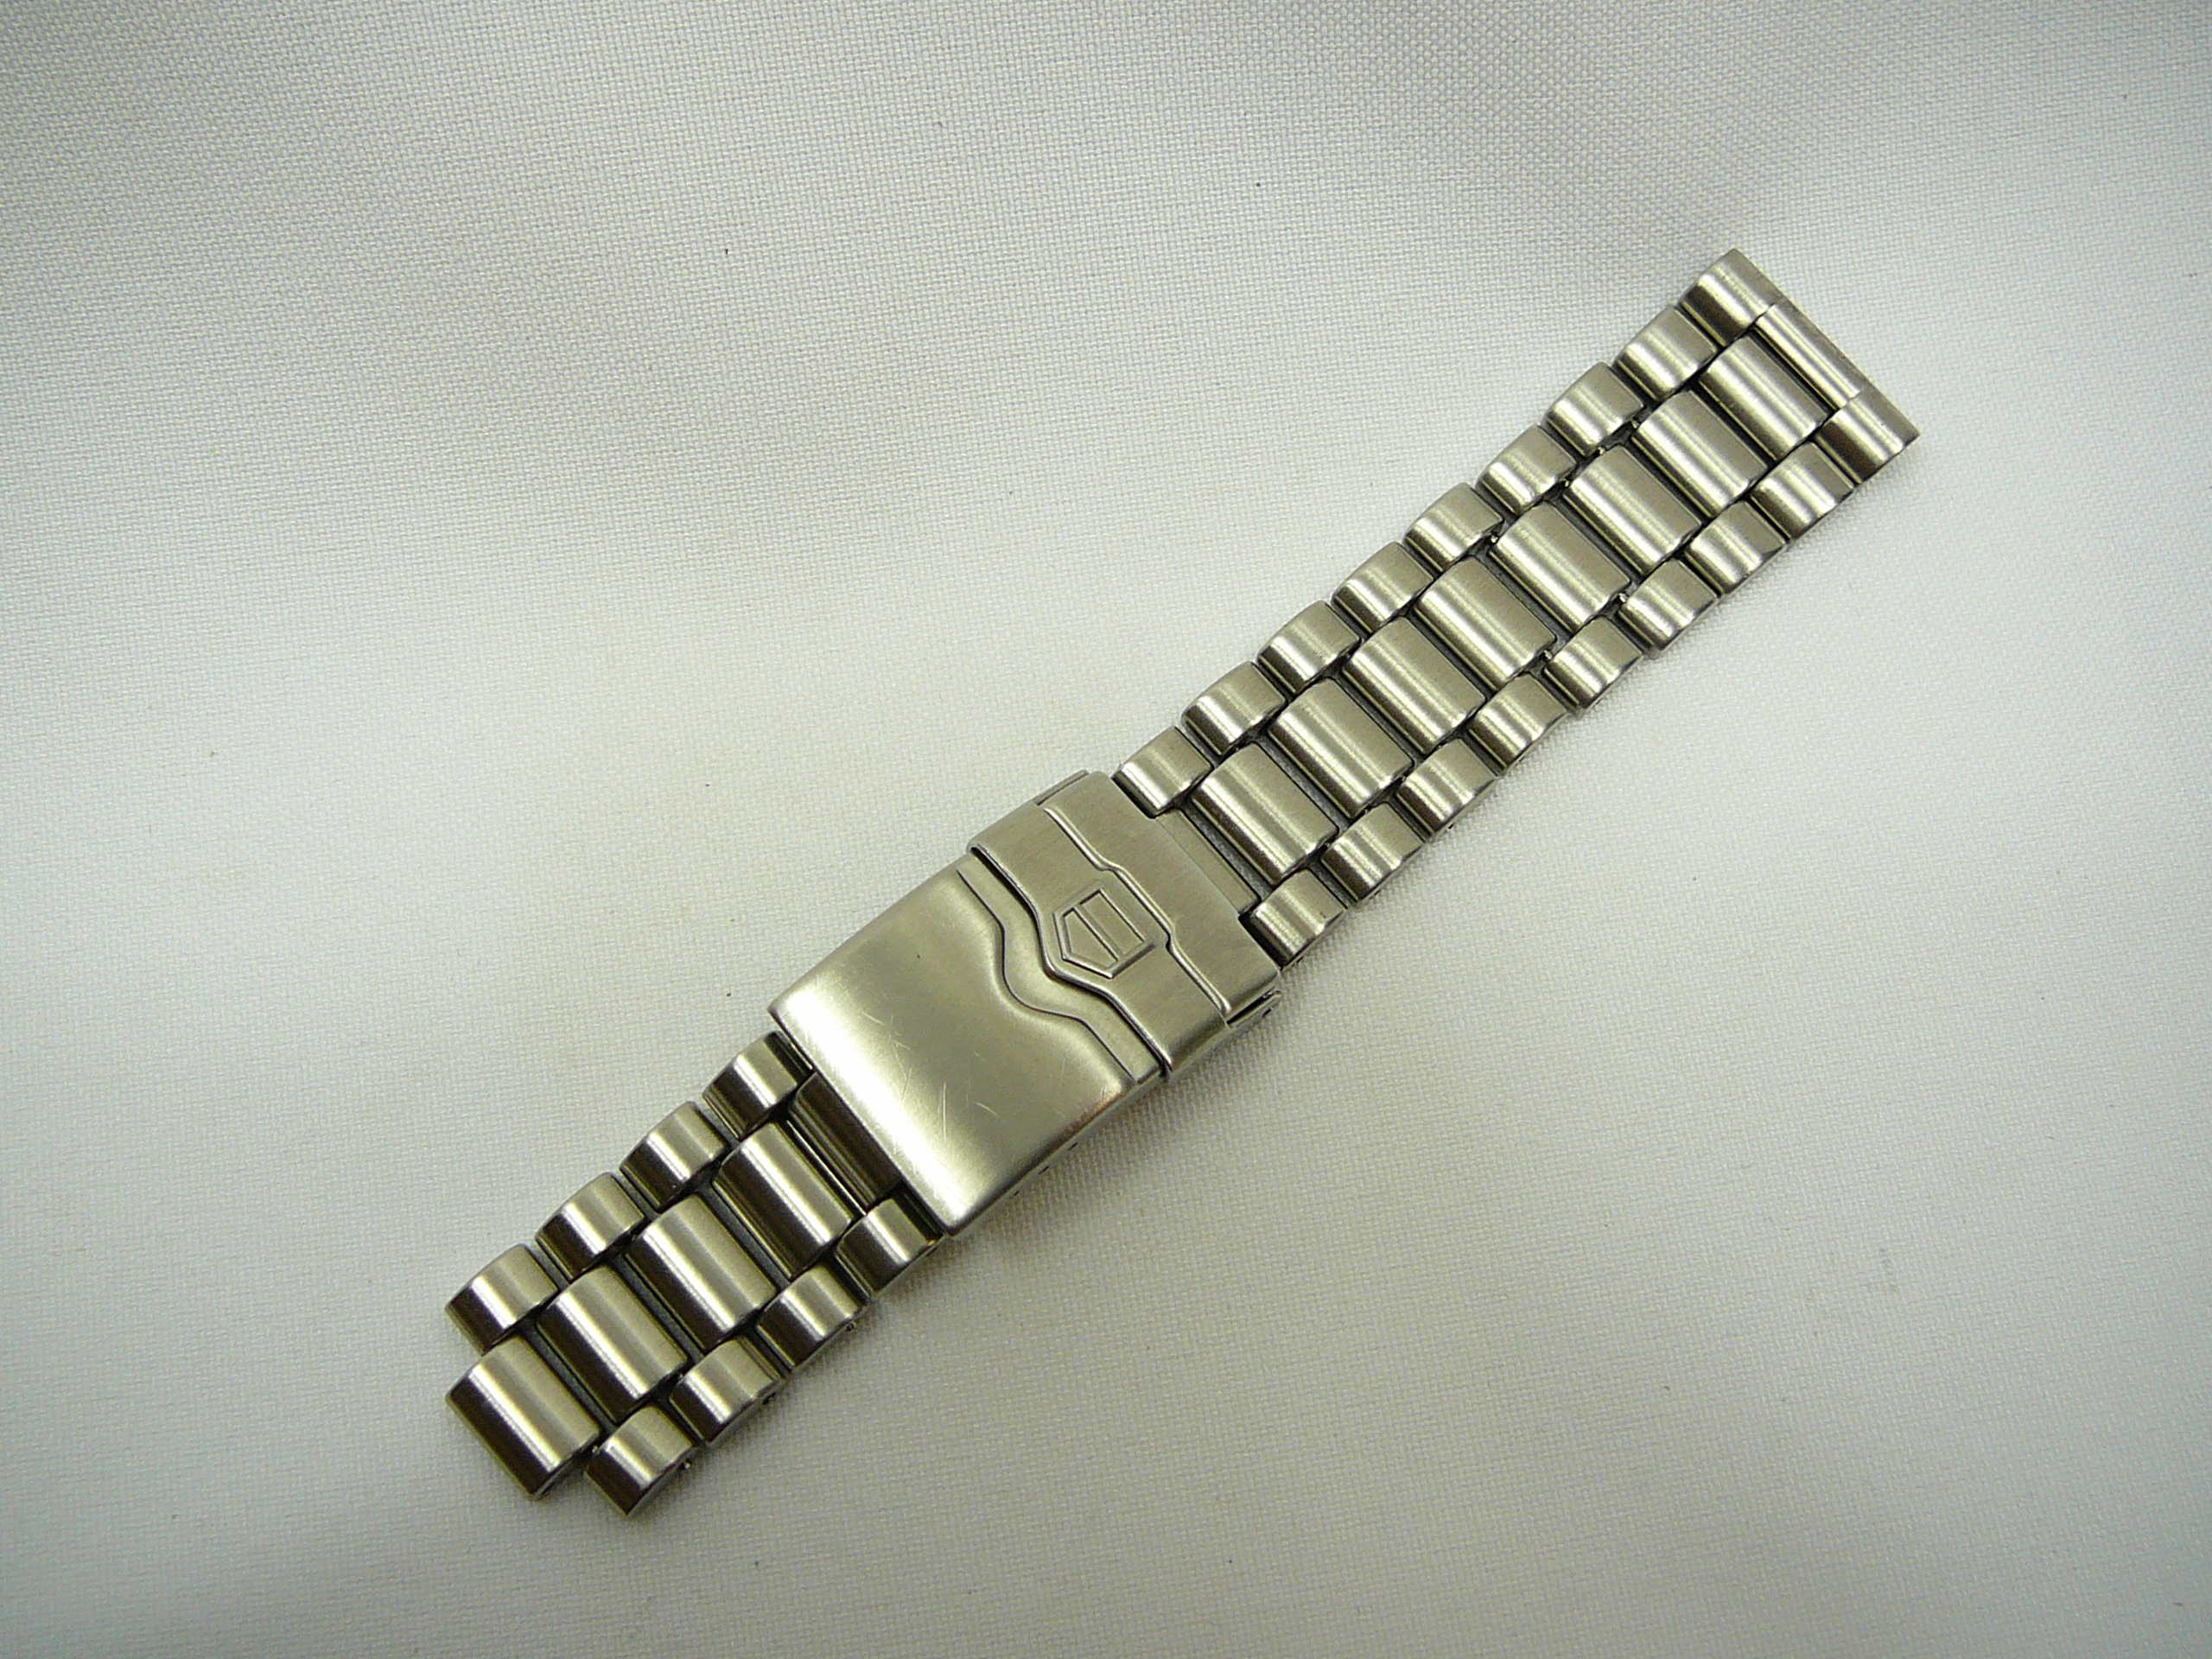 Gents Tag Heuer watch parts 21mm bracelet